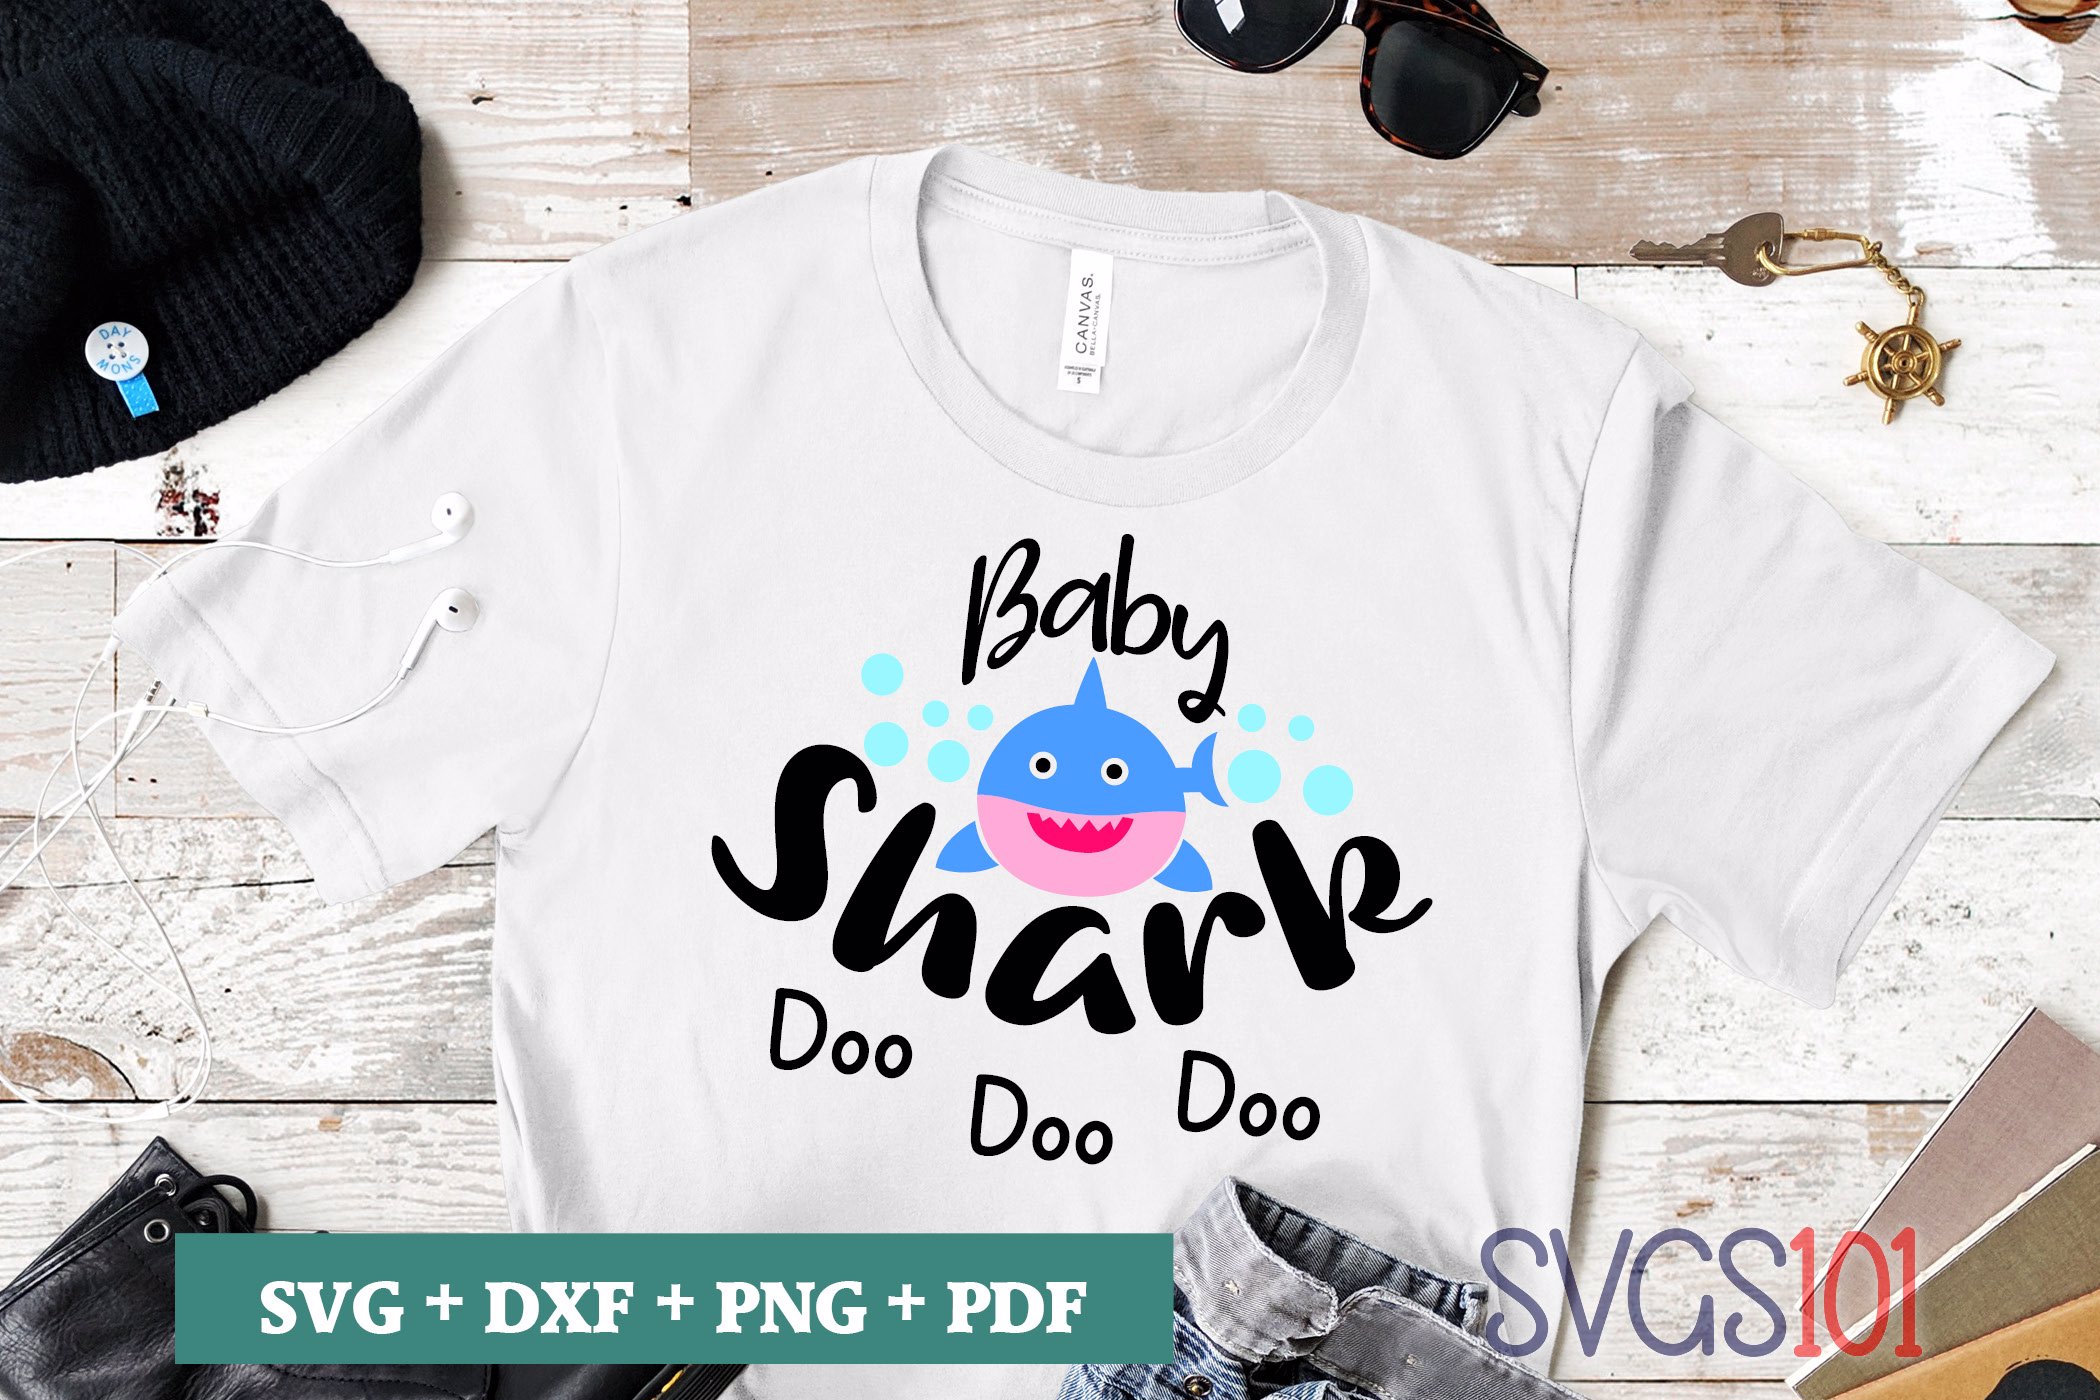 Baby Shark Doo Doo Doo SVG Cuttable file - DXF, EPS, PNG ...